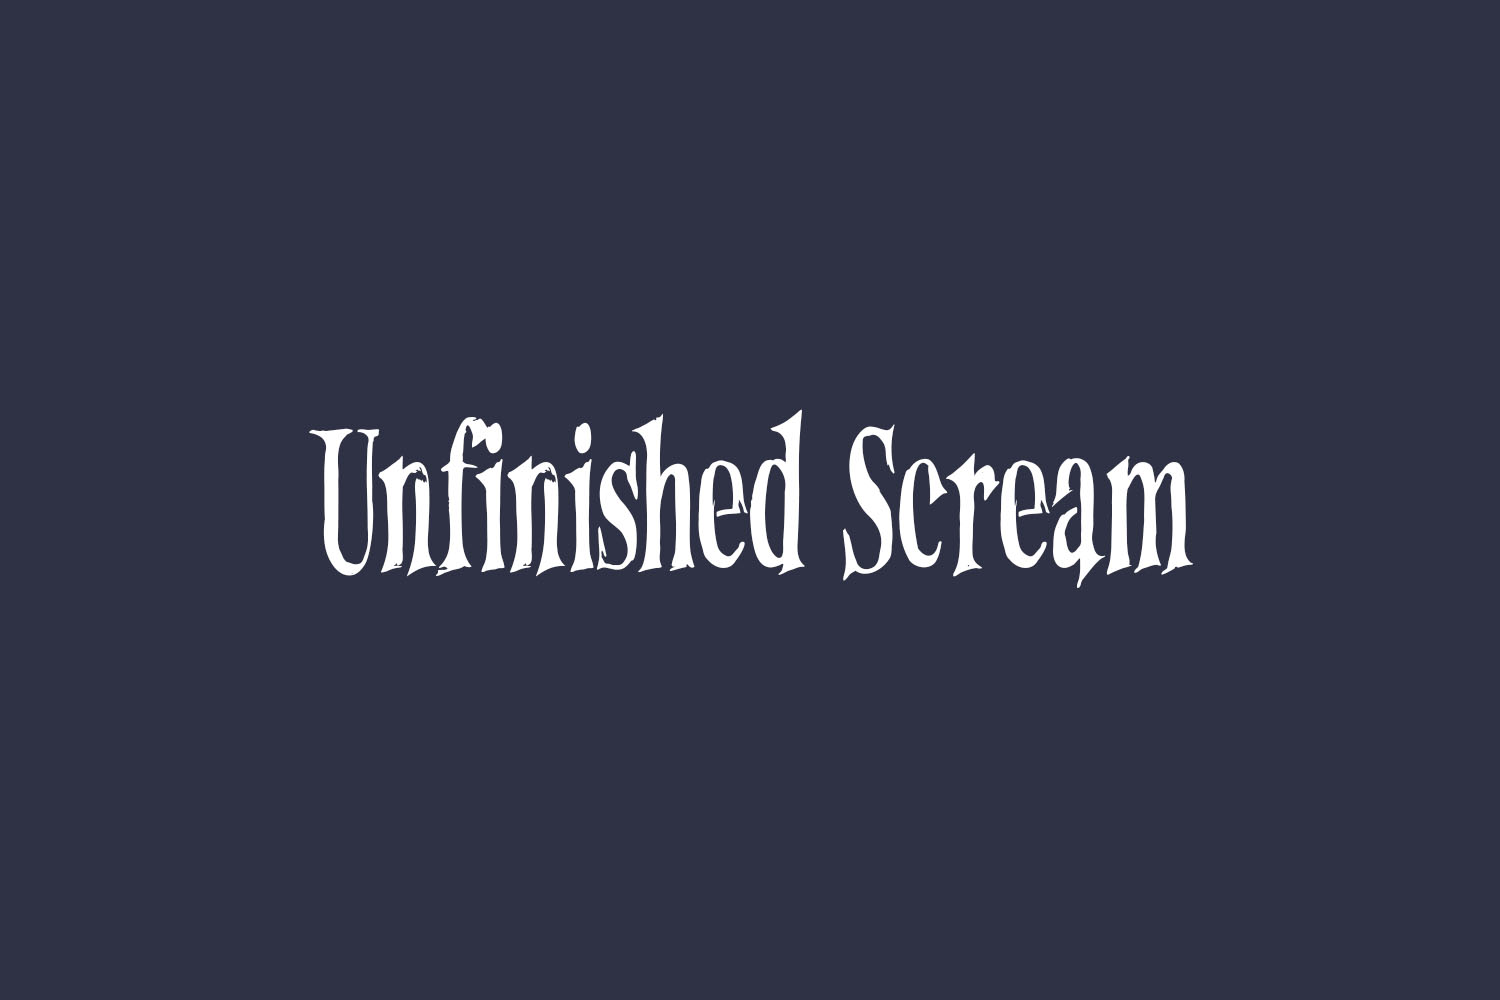 Unfinished Scream Free Font